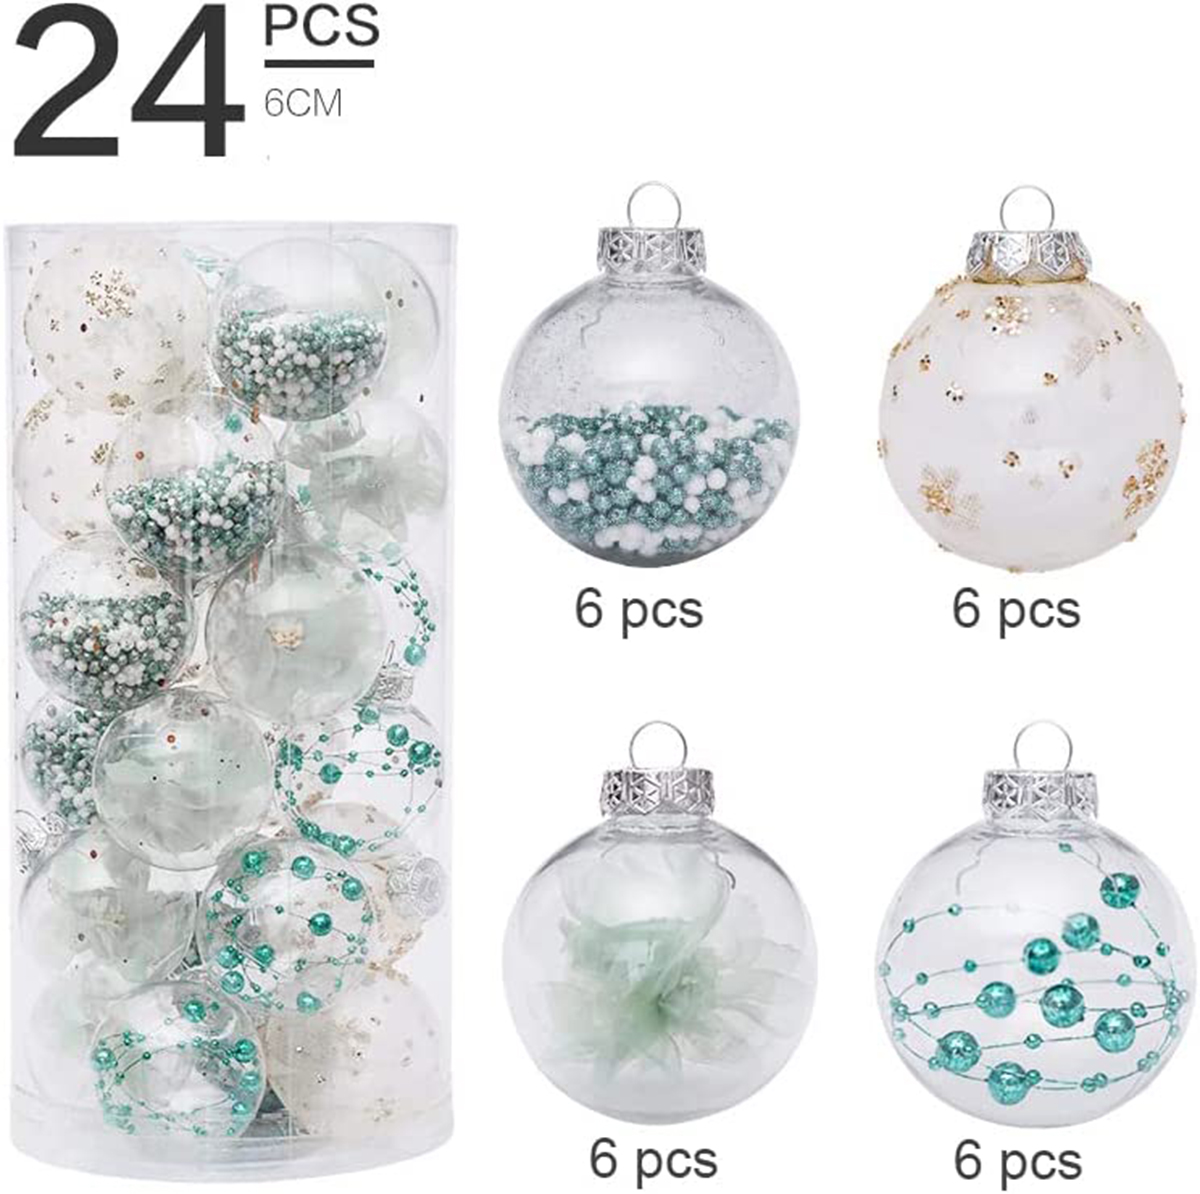 24 PCS Clear Christmas Ball Ornaments 6CM-Mint/Ivory